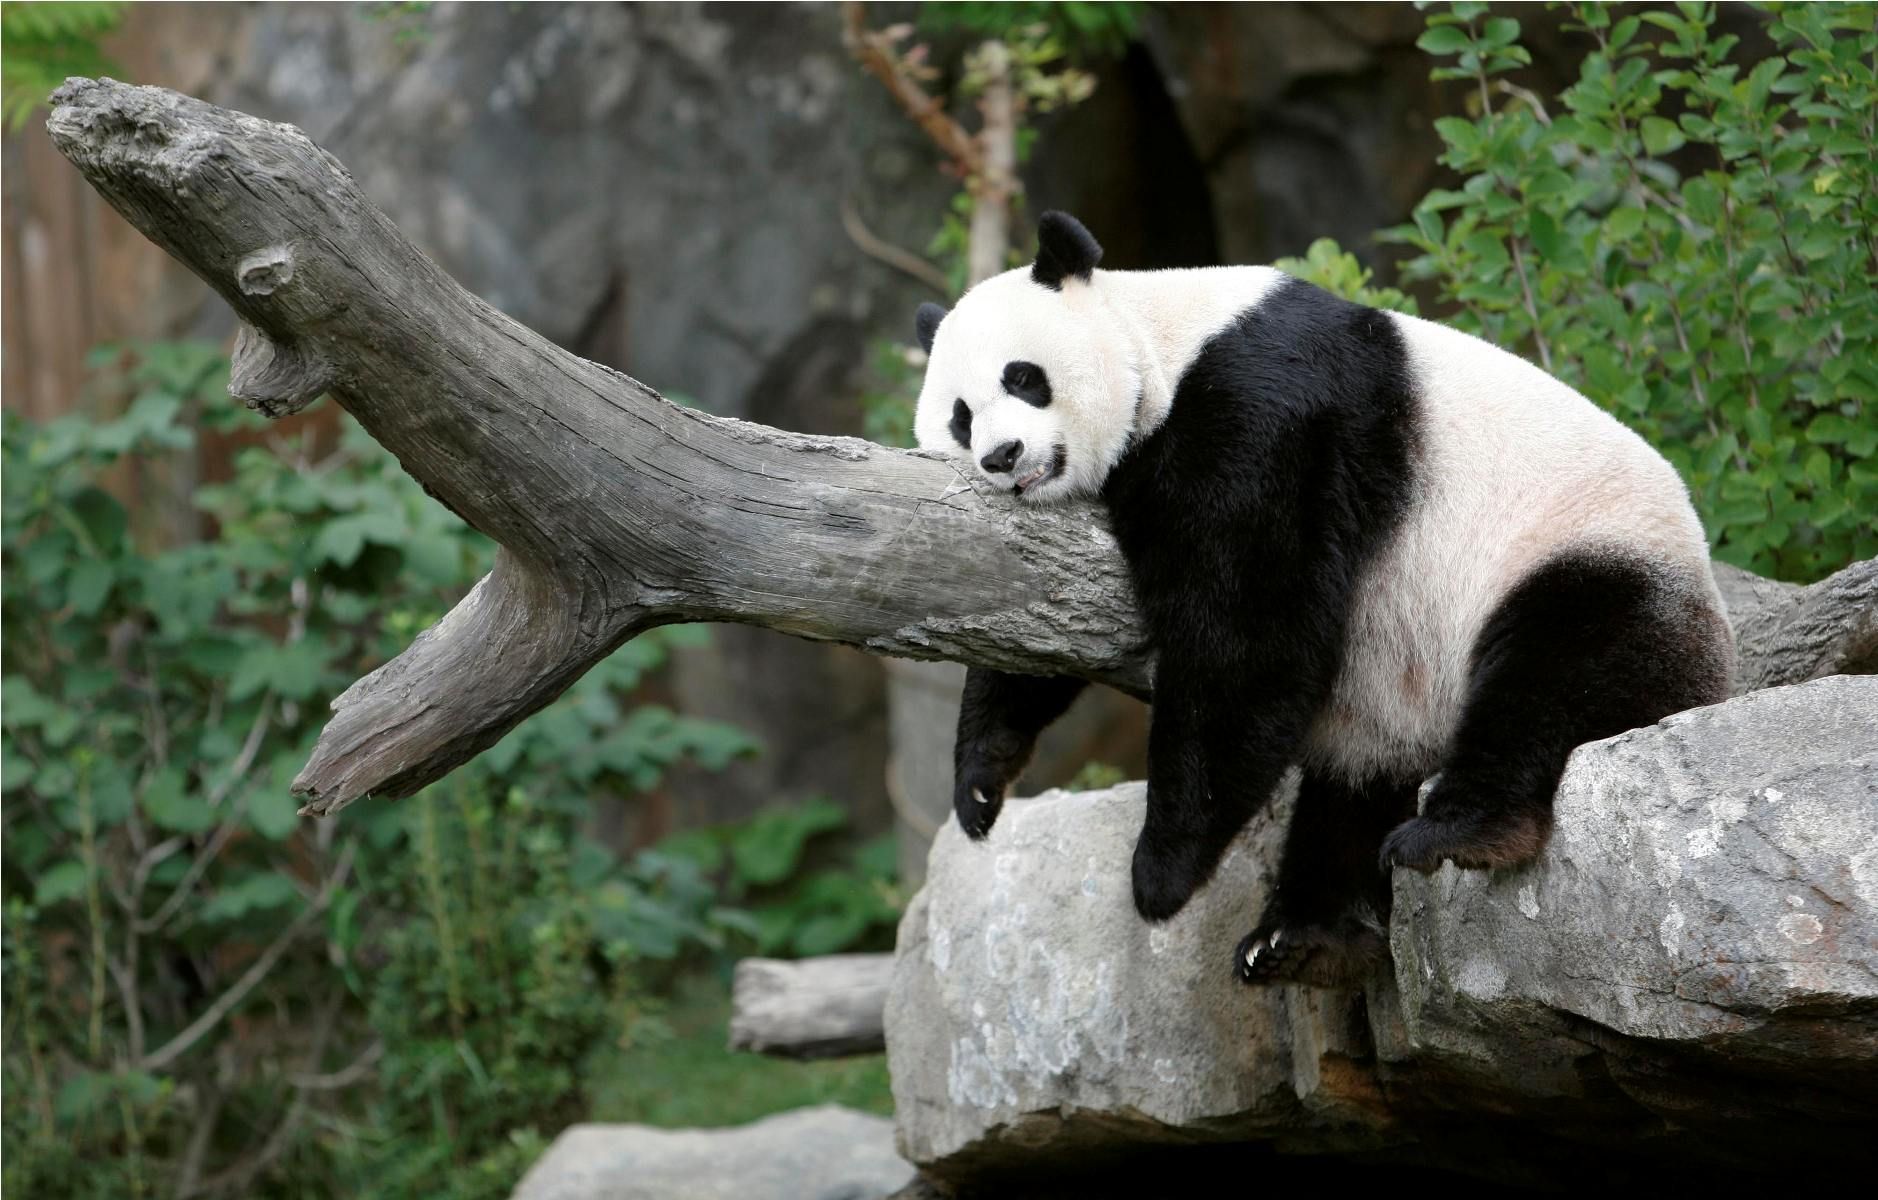 Panda Sleeping | 141 | Pinterest | Panda and Wallpaper